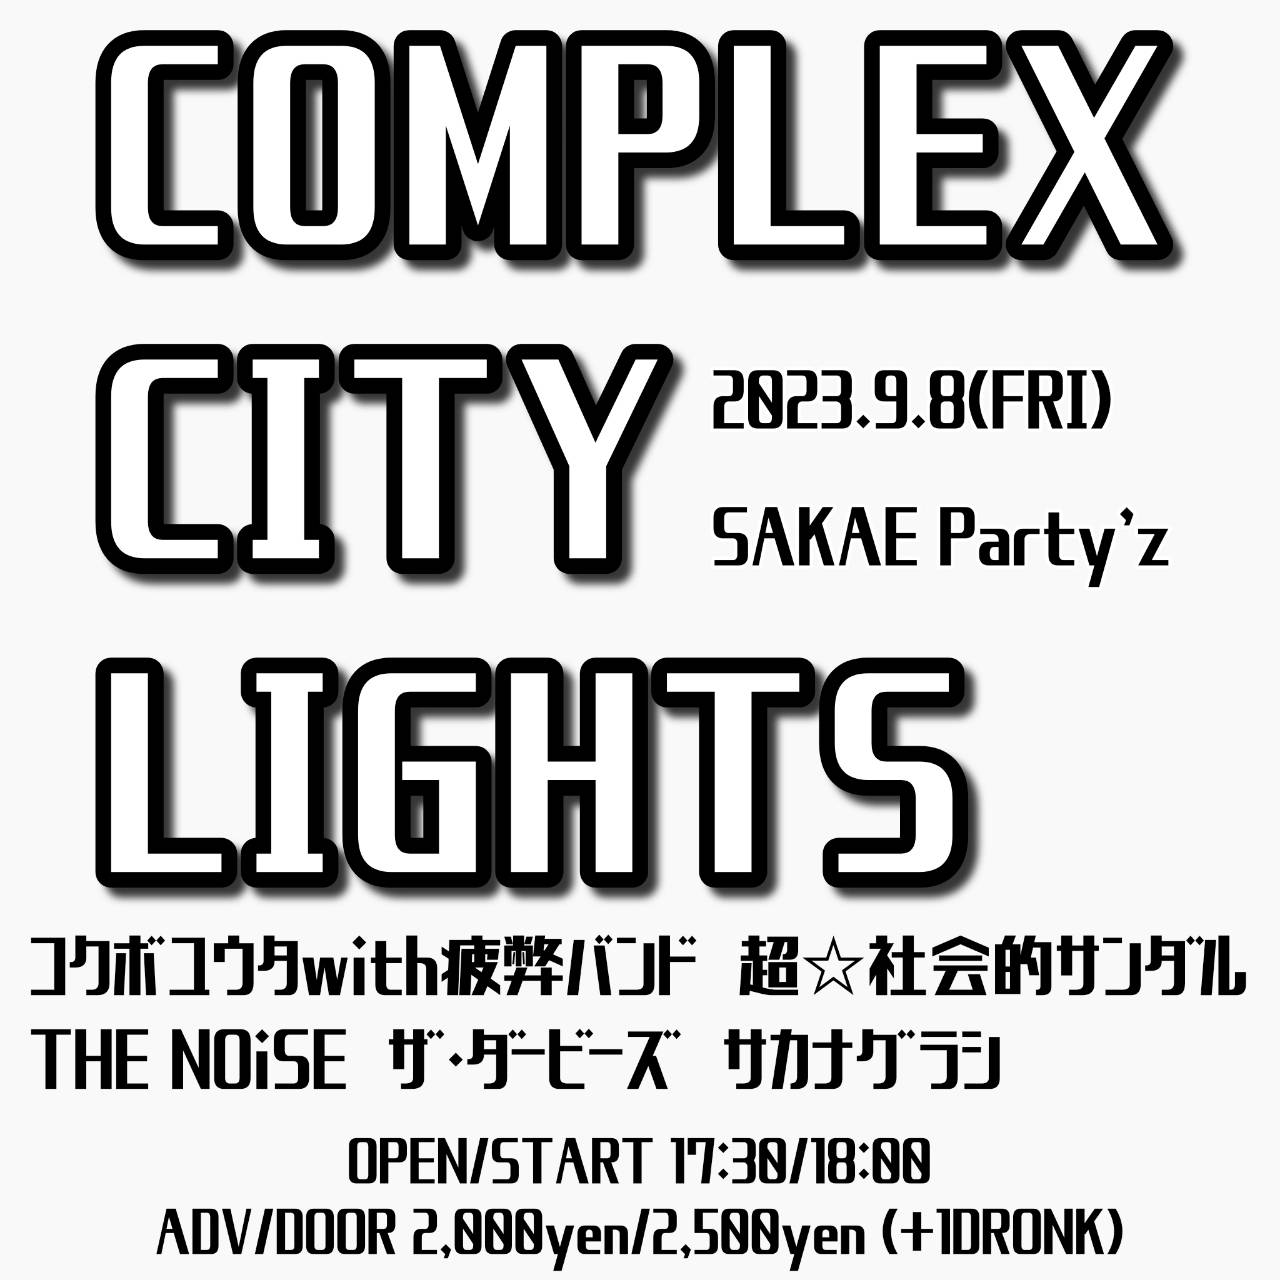 COMPLEX CITY LIGHTS